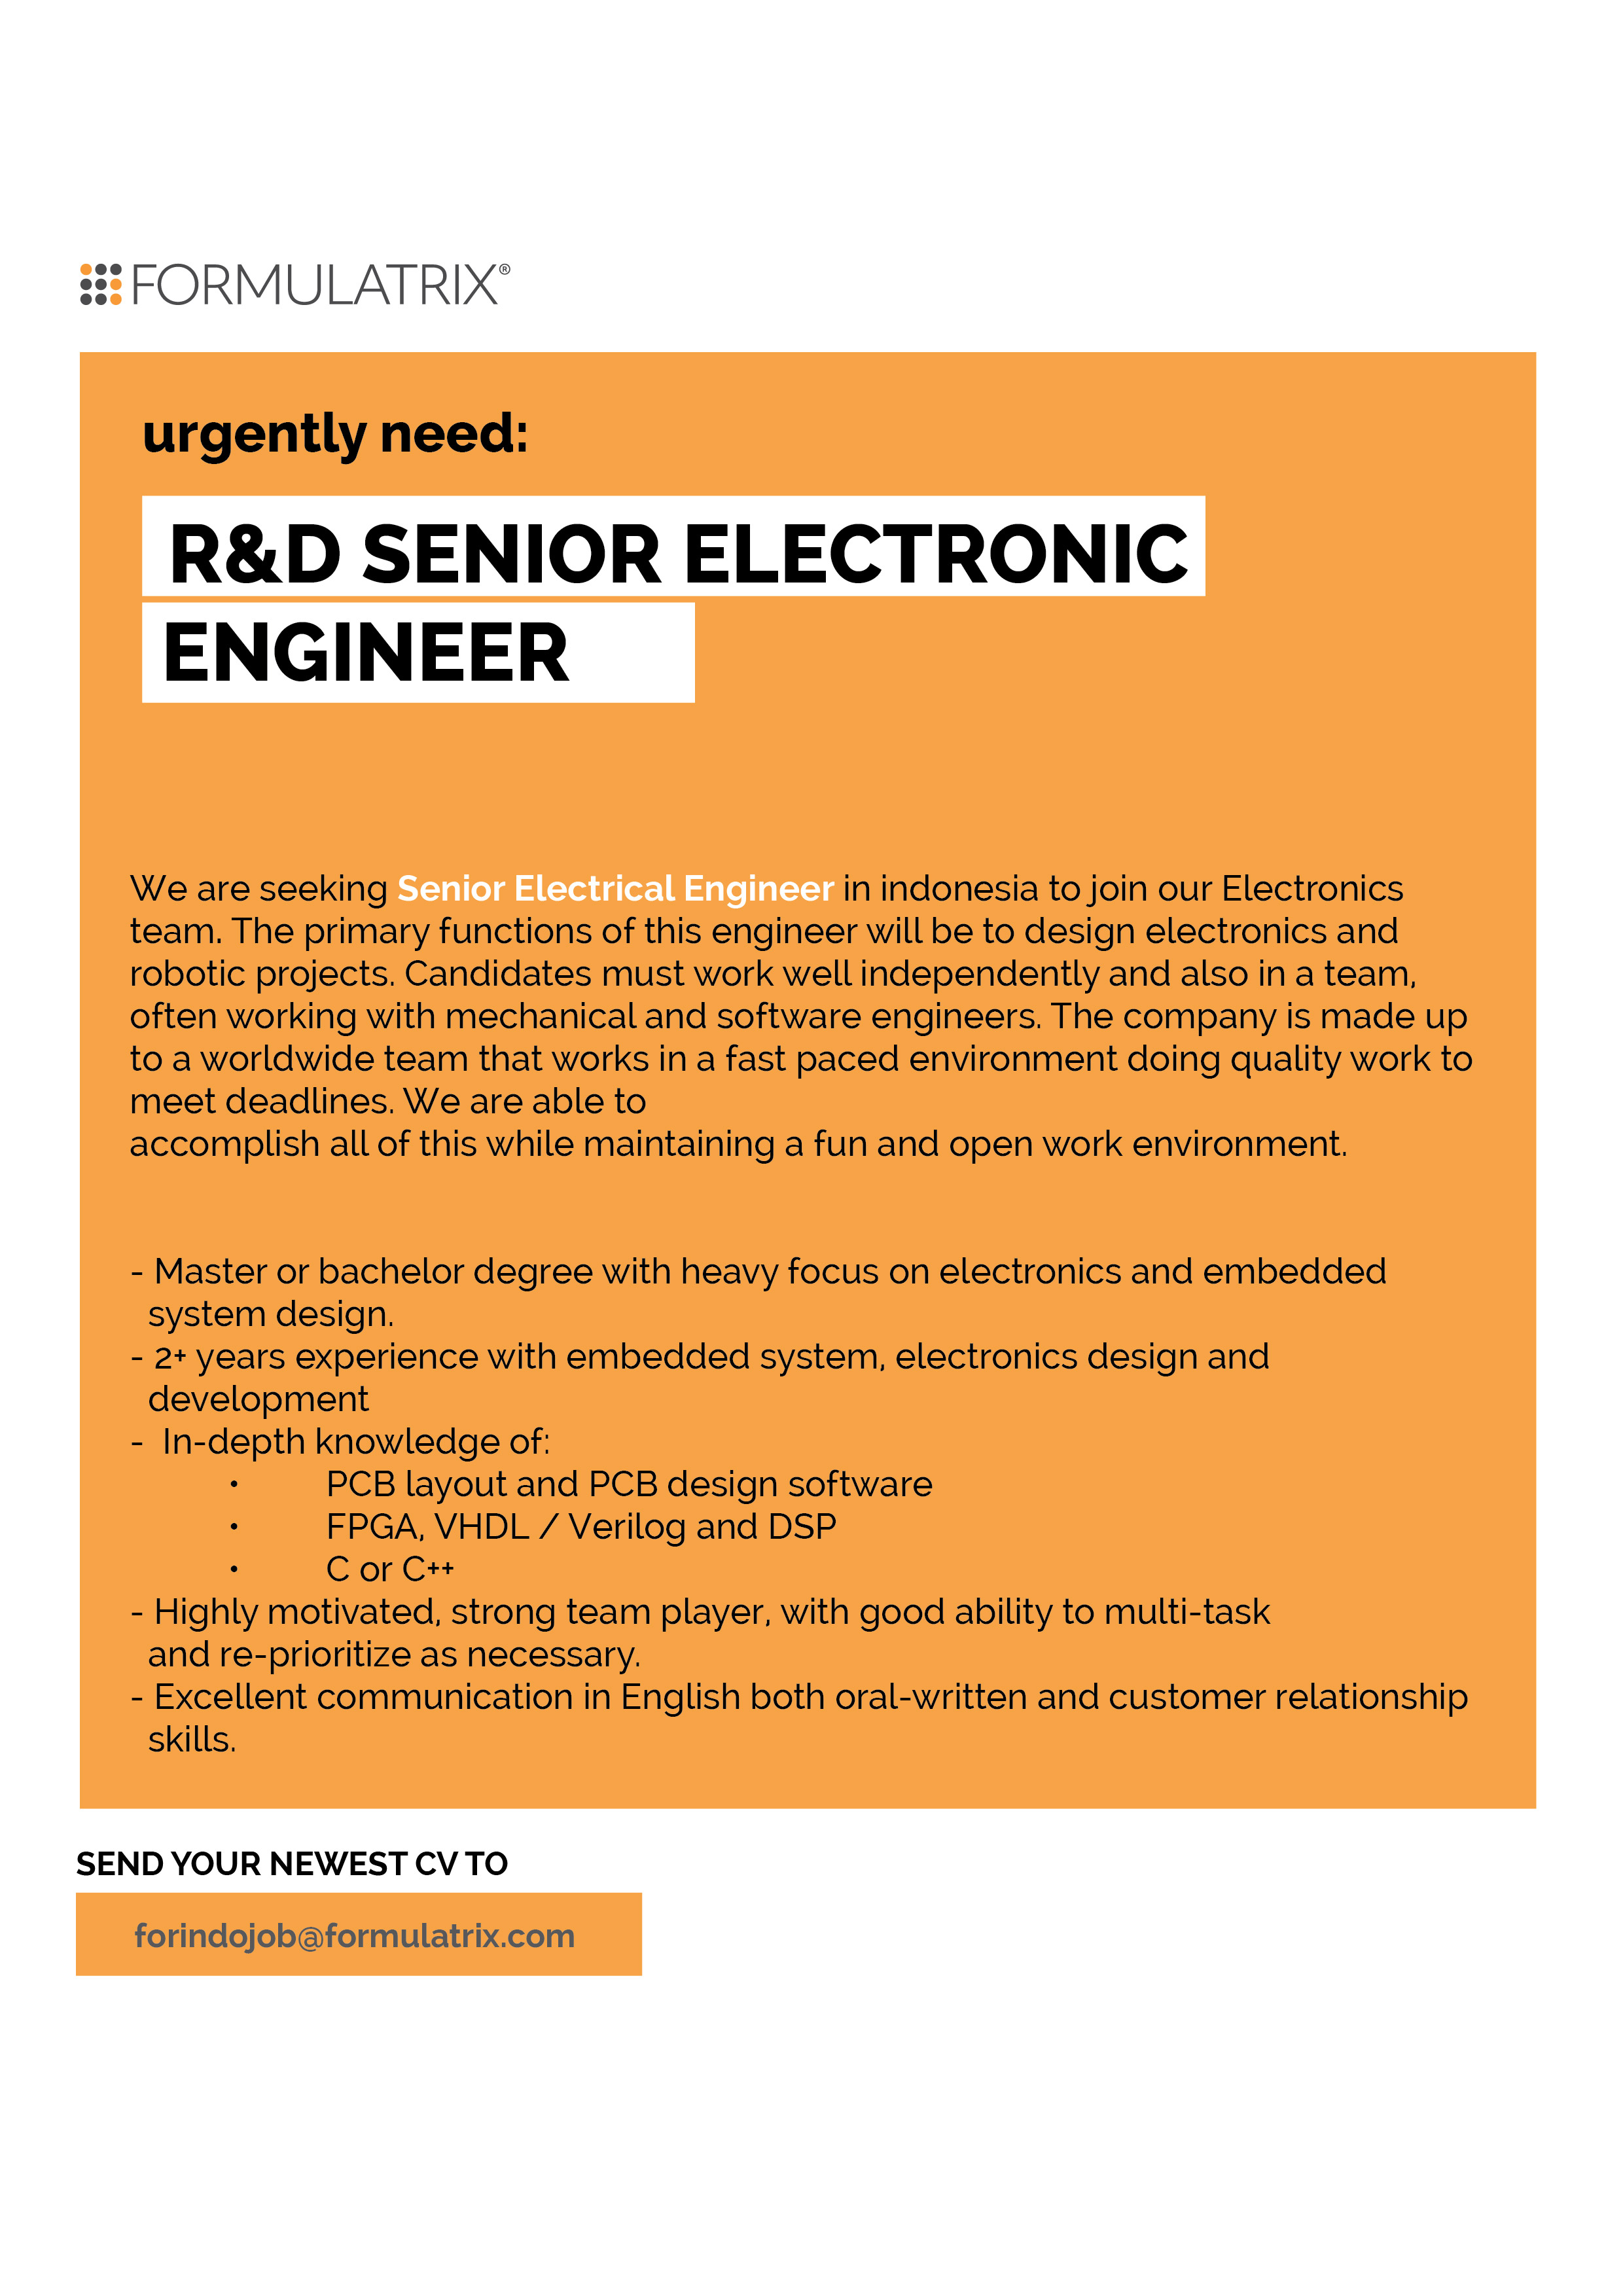 rnd-senior-electronic-engineer.jpg